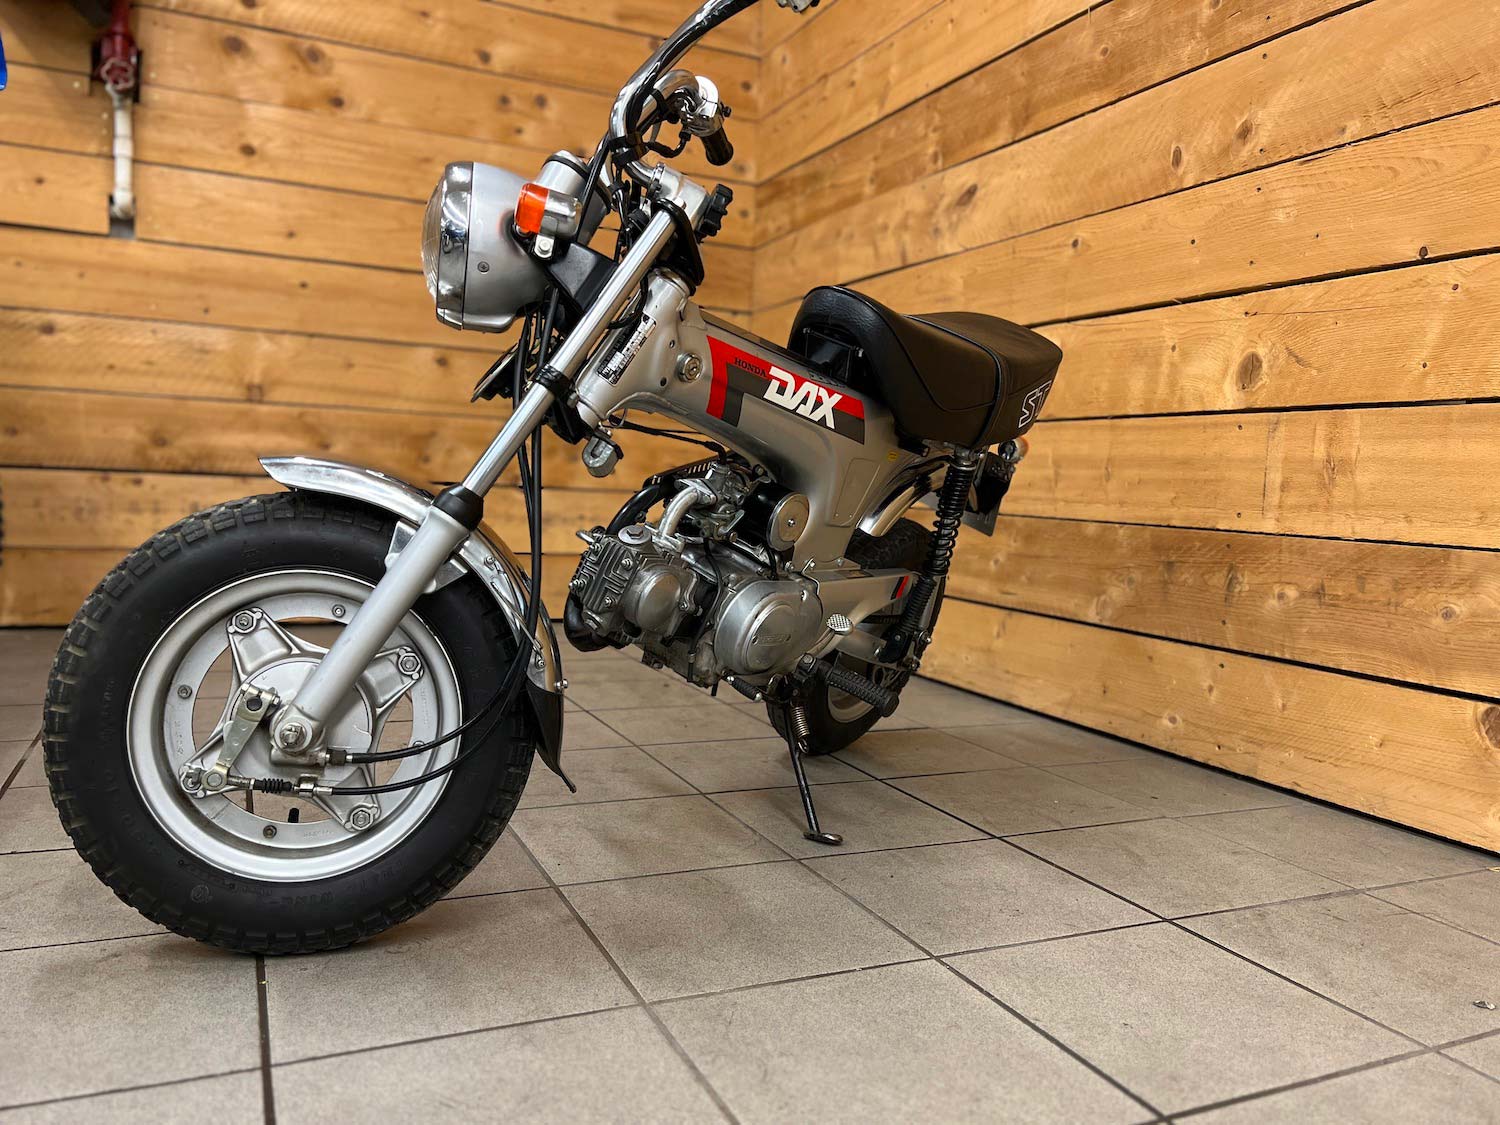 Honda_Dax_st70_Cezanne_classic_motorcycle_3-148.jpg